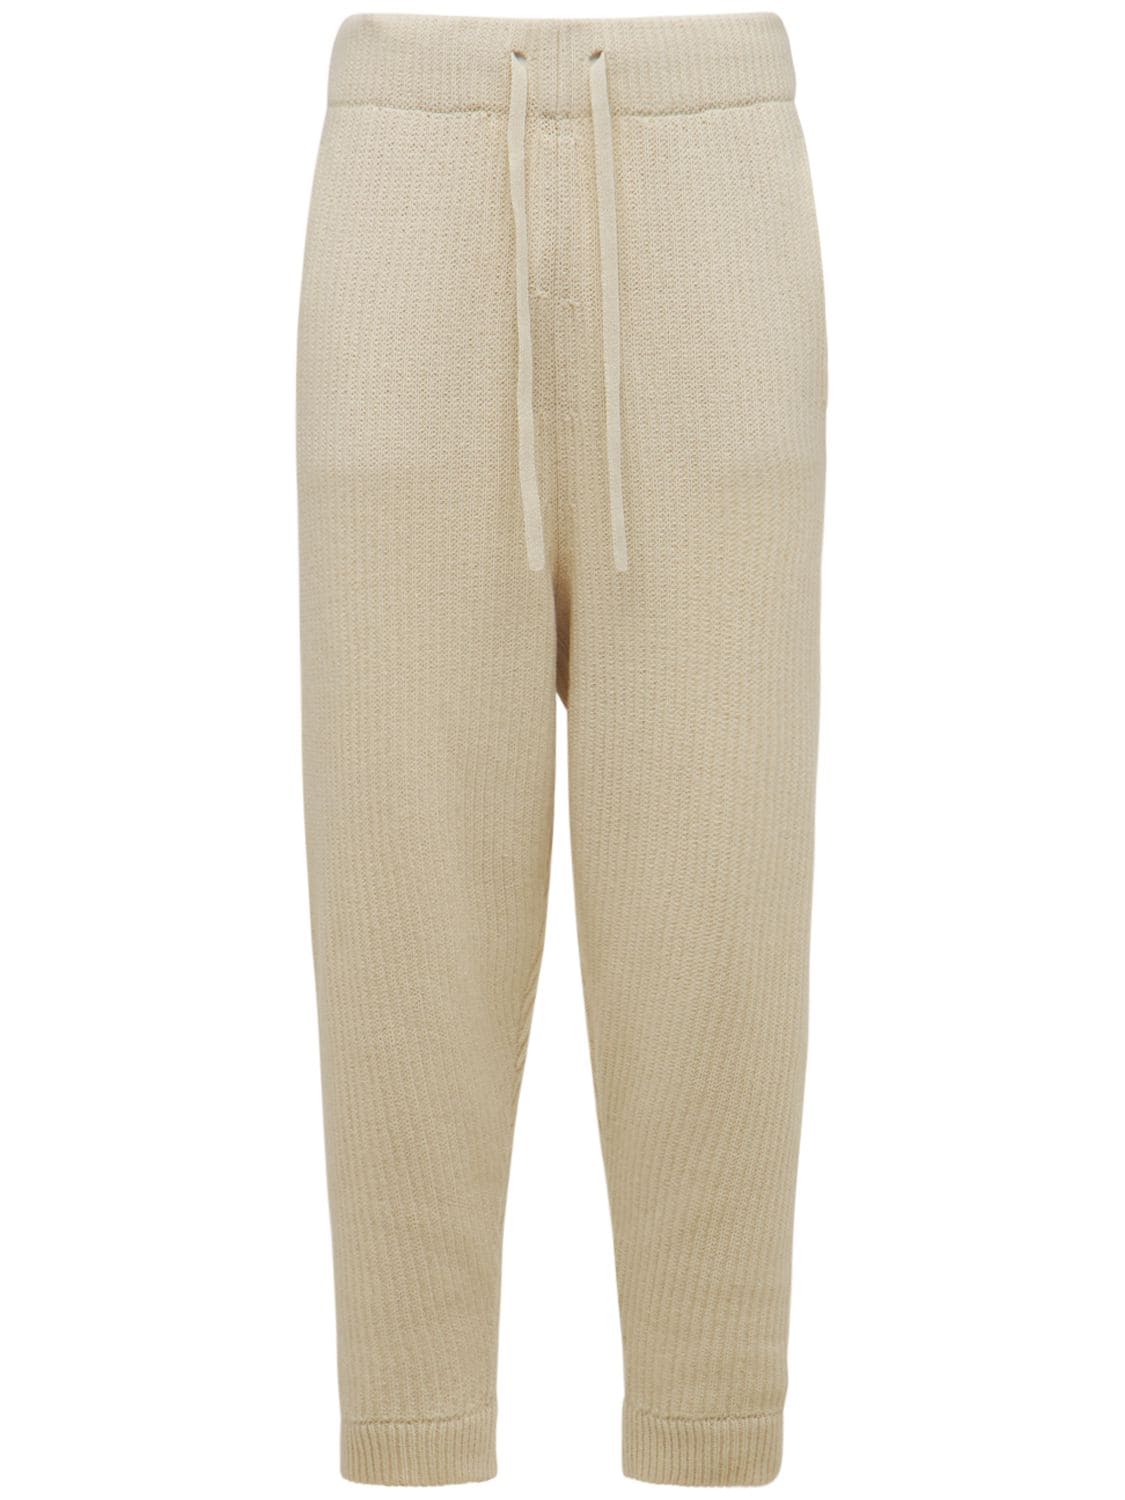 Moncler 1952 Cashmere & Wool Sweatpants